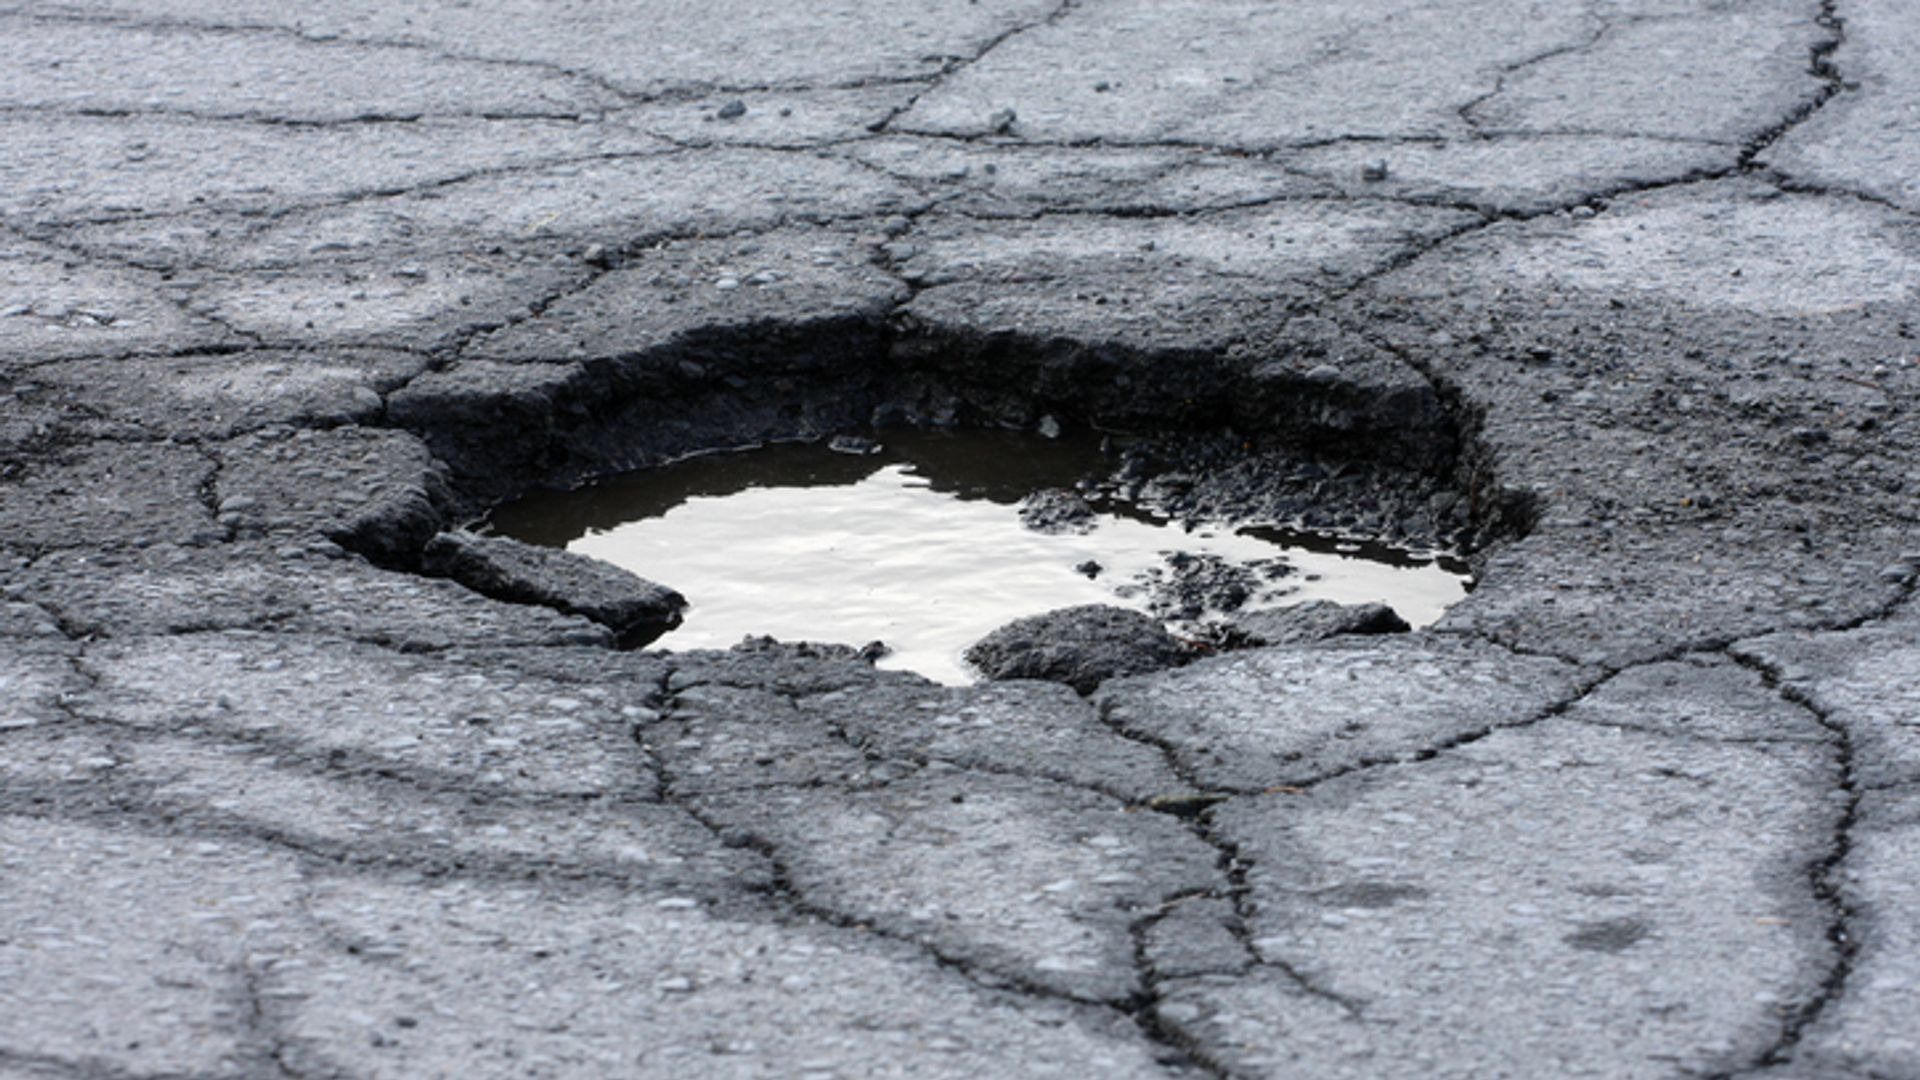 Labour pledges to fix one million potholes a year if elected